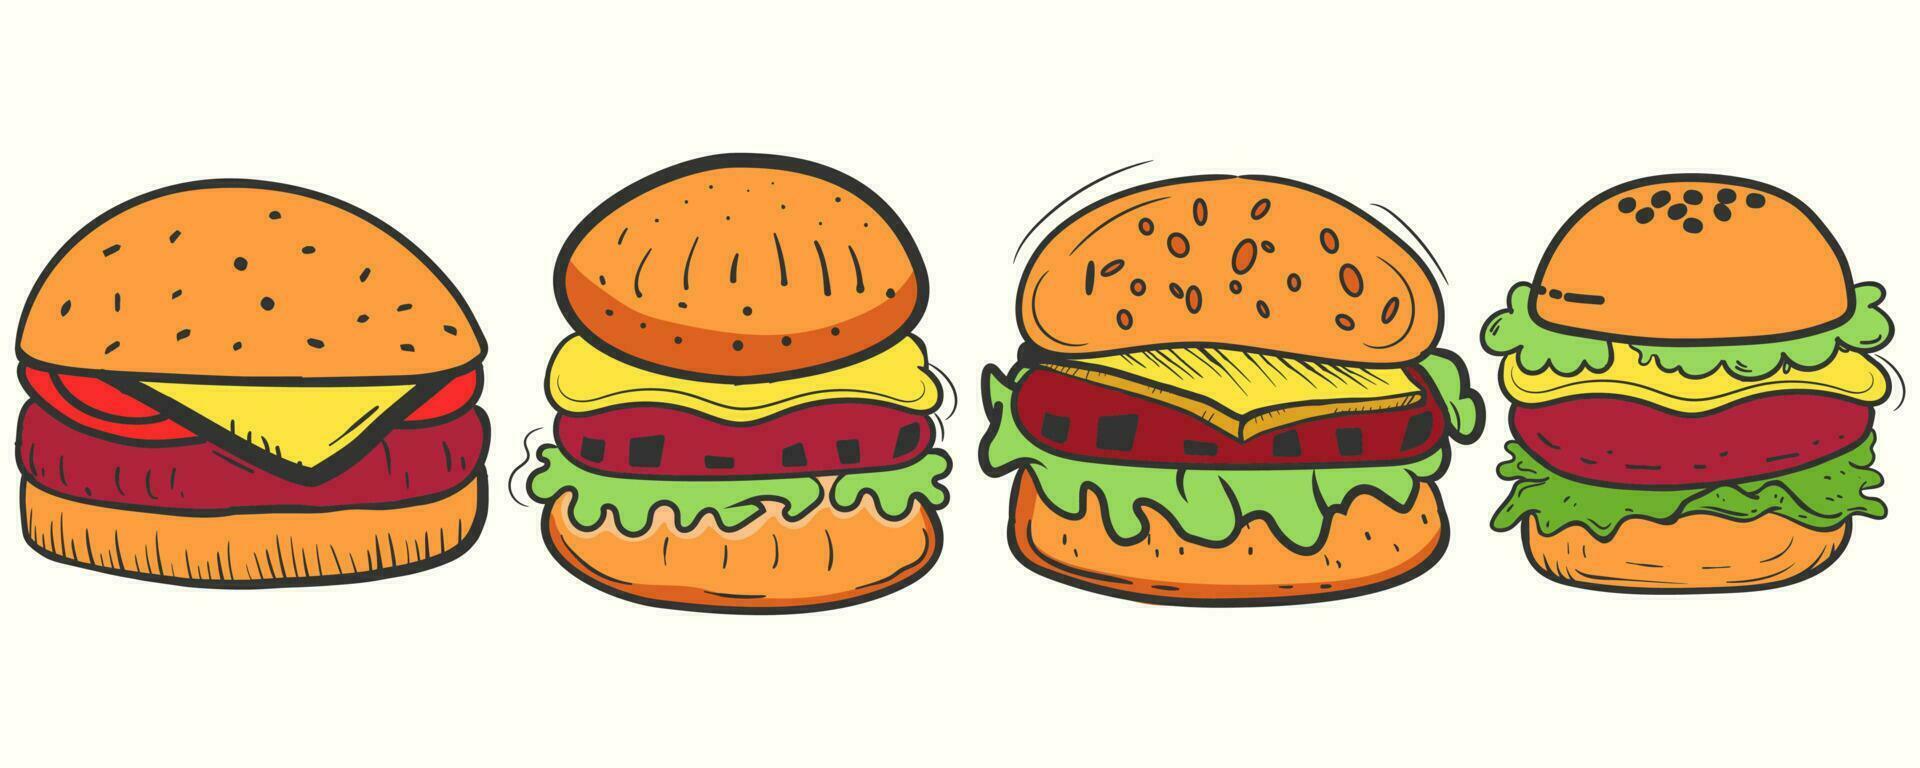 Cute hand-drawn burger icon illustration set in cartoon style vector